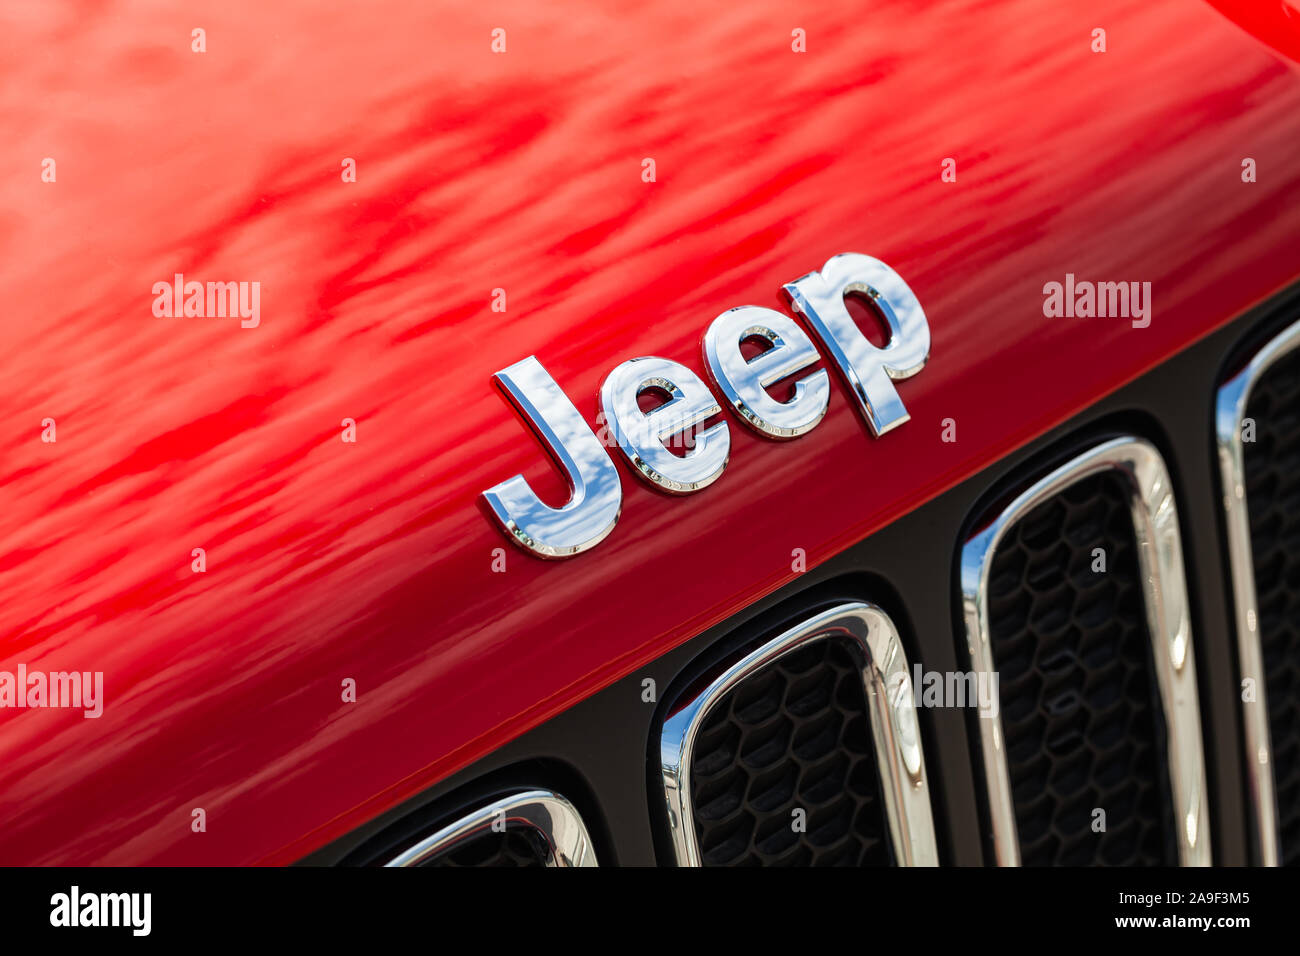 St. Petersburg, Russland - 13. August 2018: Verchromt Jeep auto Logo am Roten SUV Auto Motorhaube eingebaut, Nahaufnahme Foto mit selektiven Fokus Stockfoto